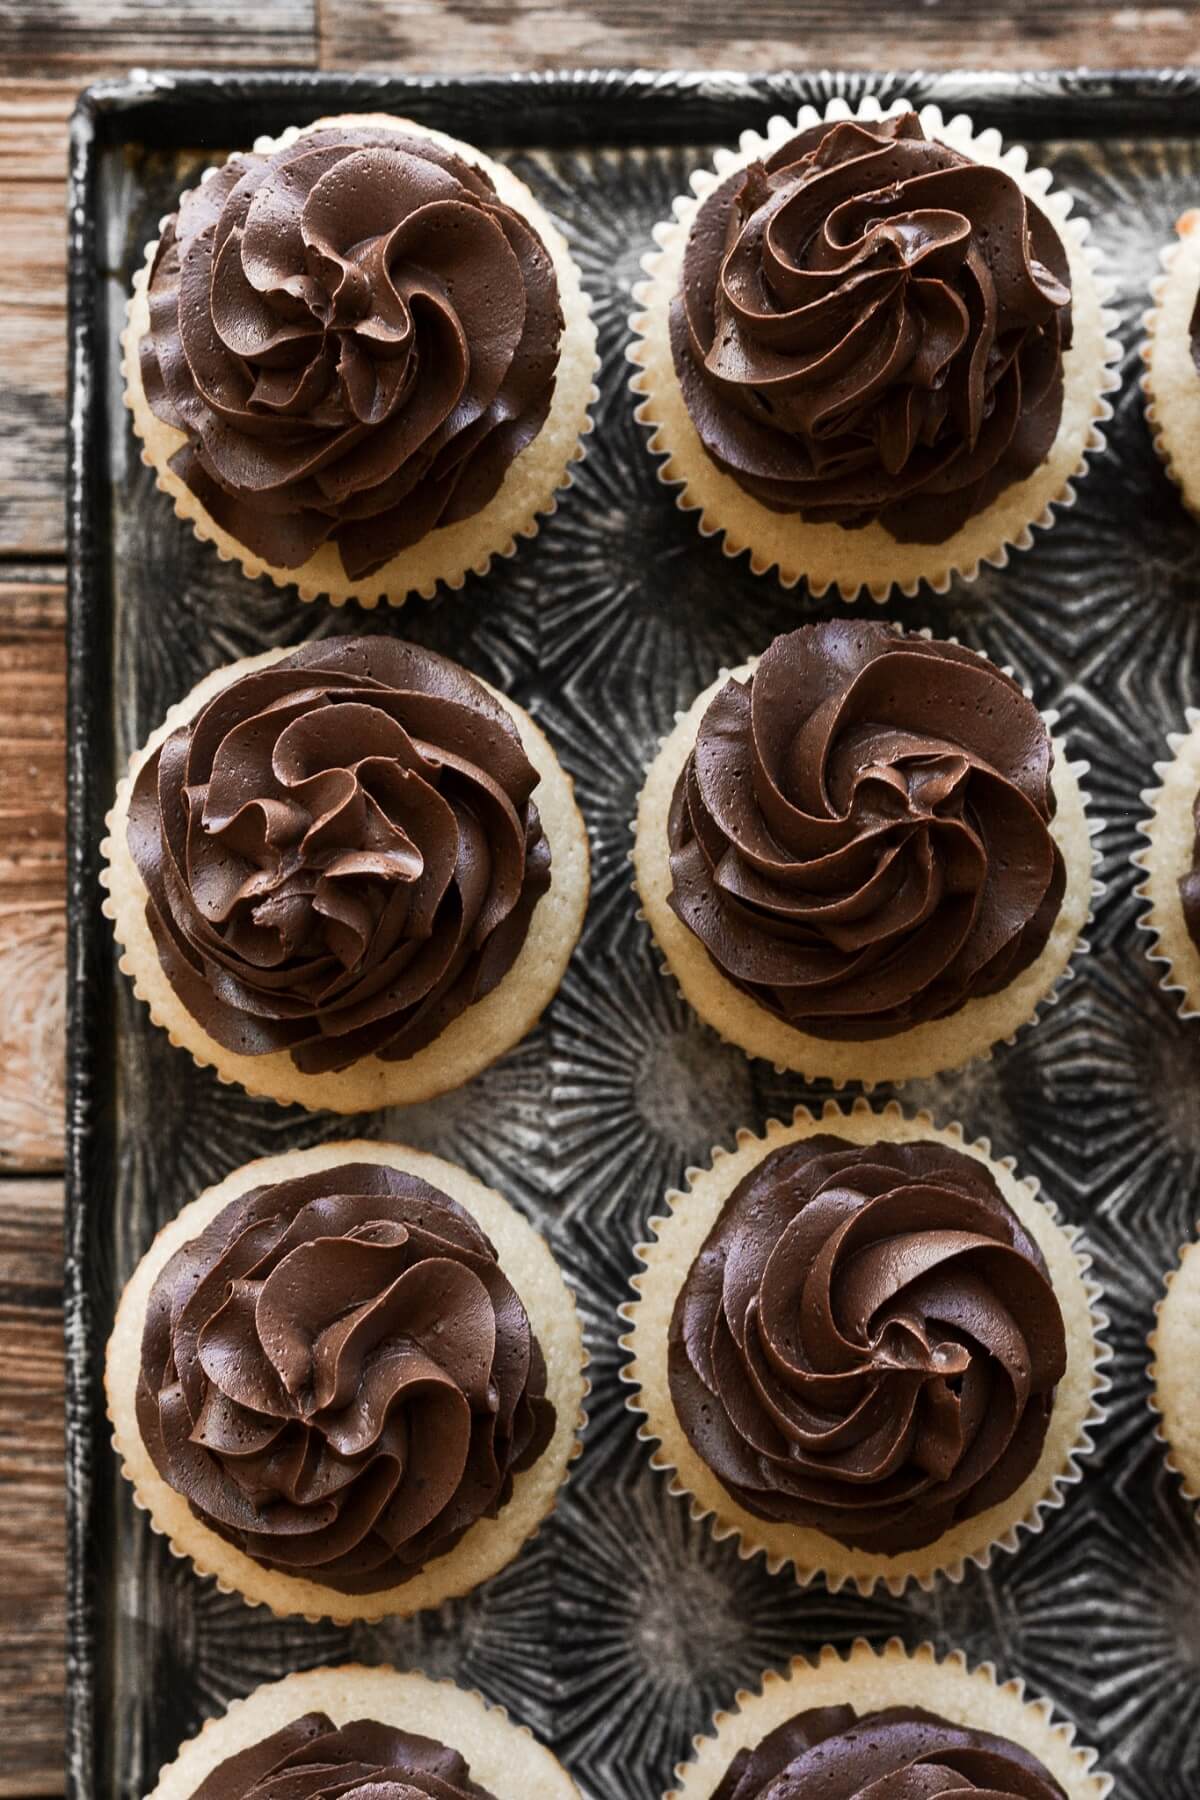 Chocolate buttercream piped onto vanilla cupcakes.